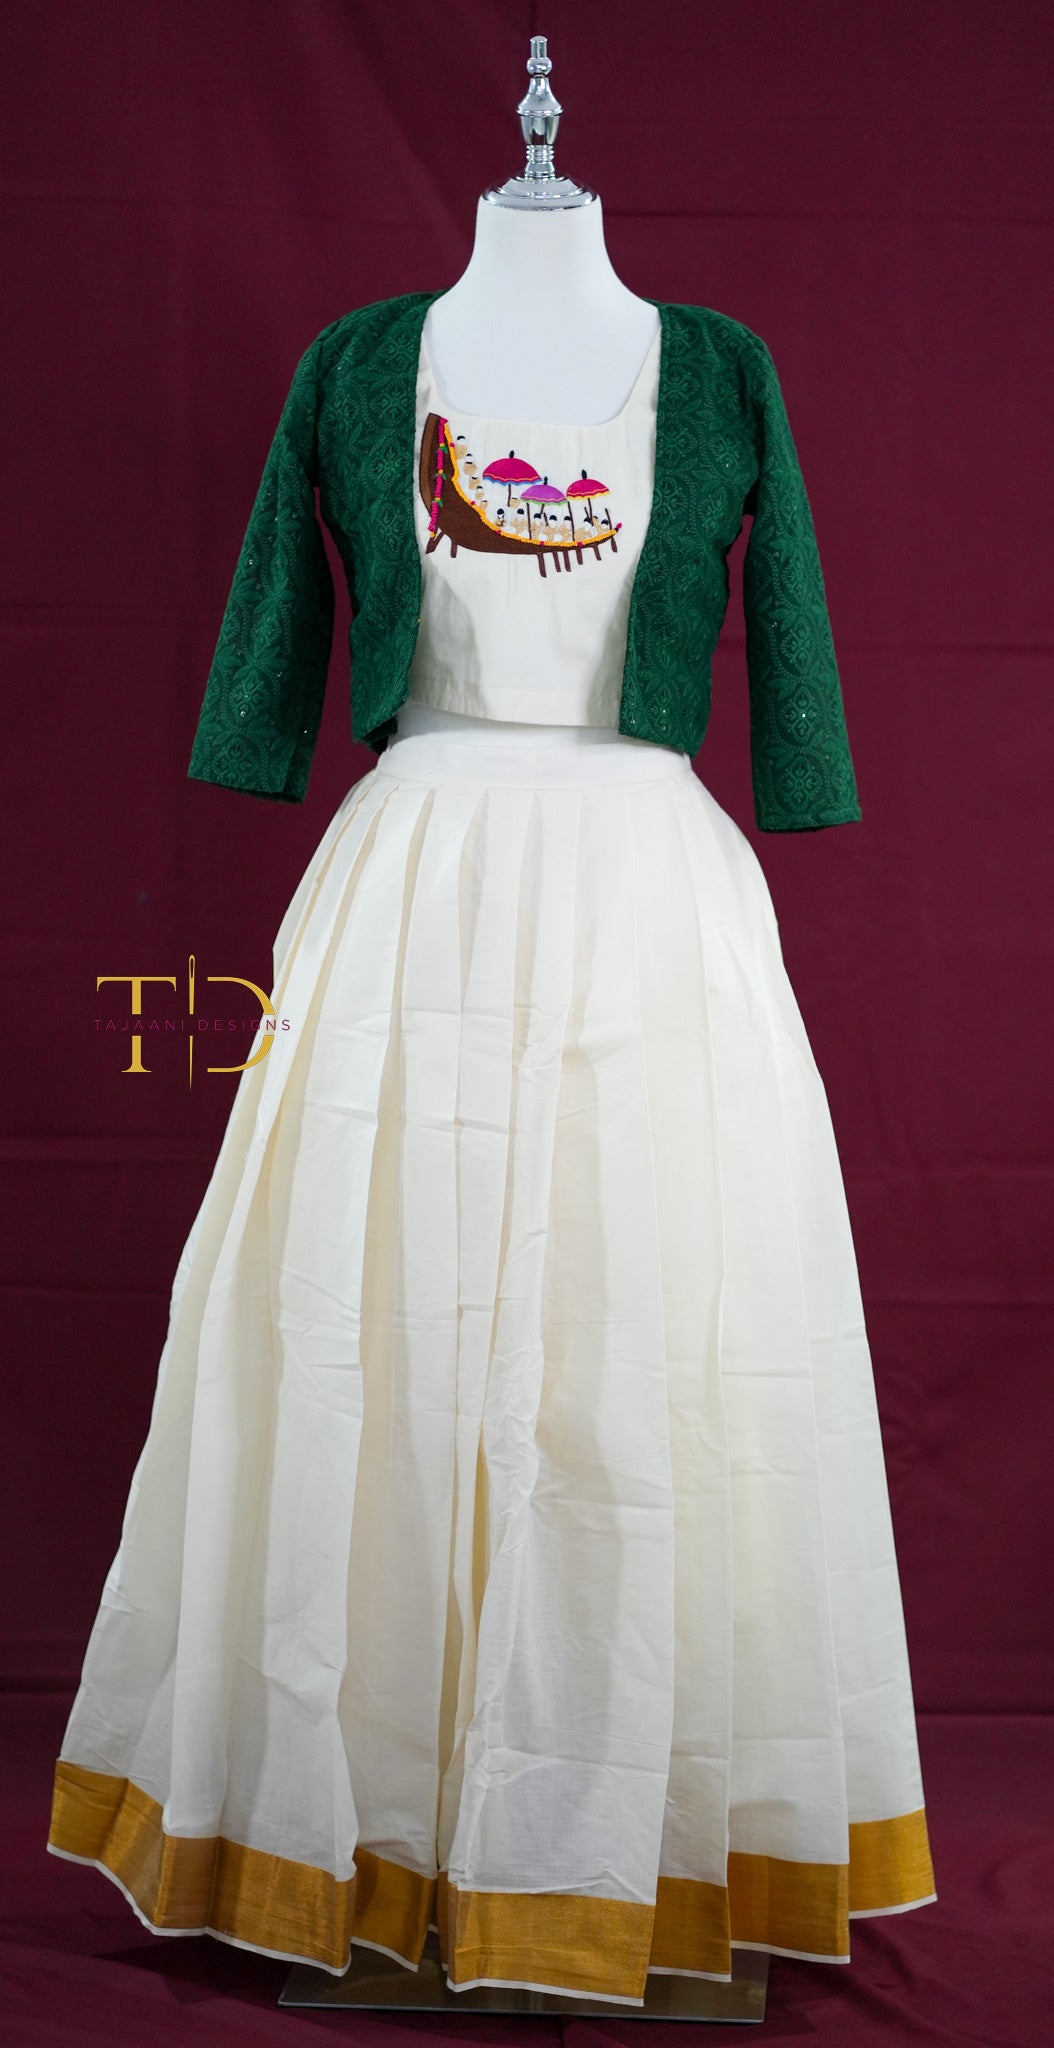 Kerala Kasavu Pavadai (skirt) with Crop top with Kerala Boat theme and Long Jacket